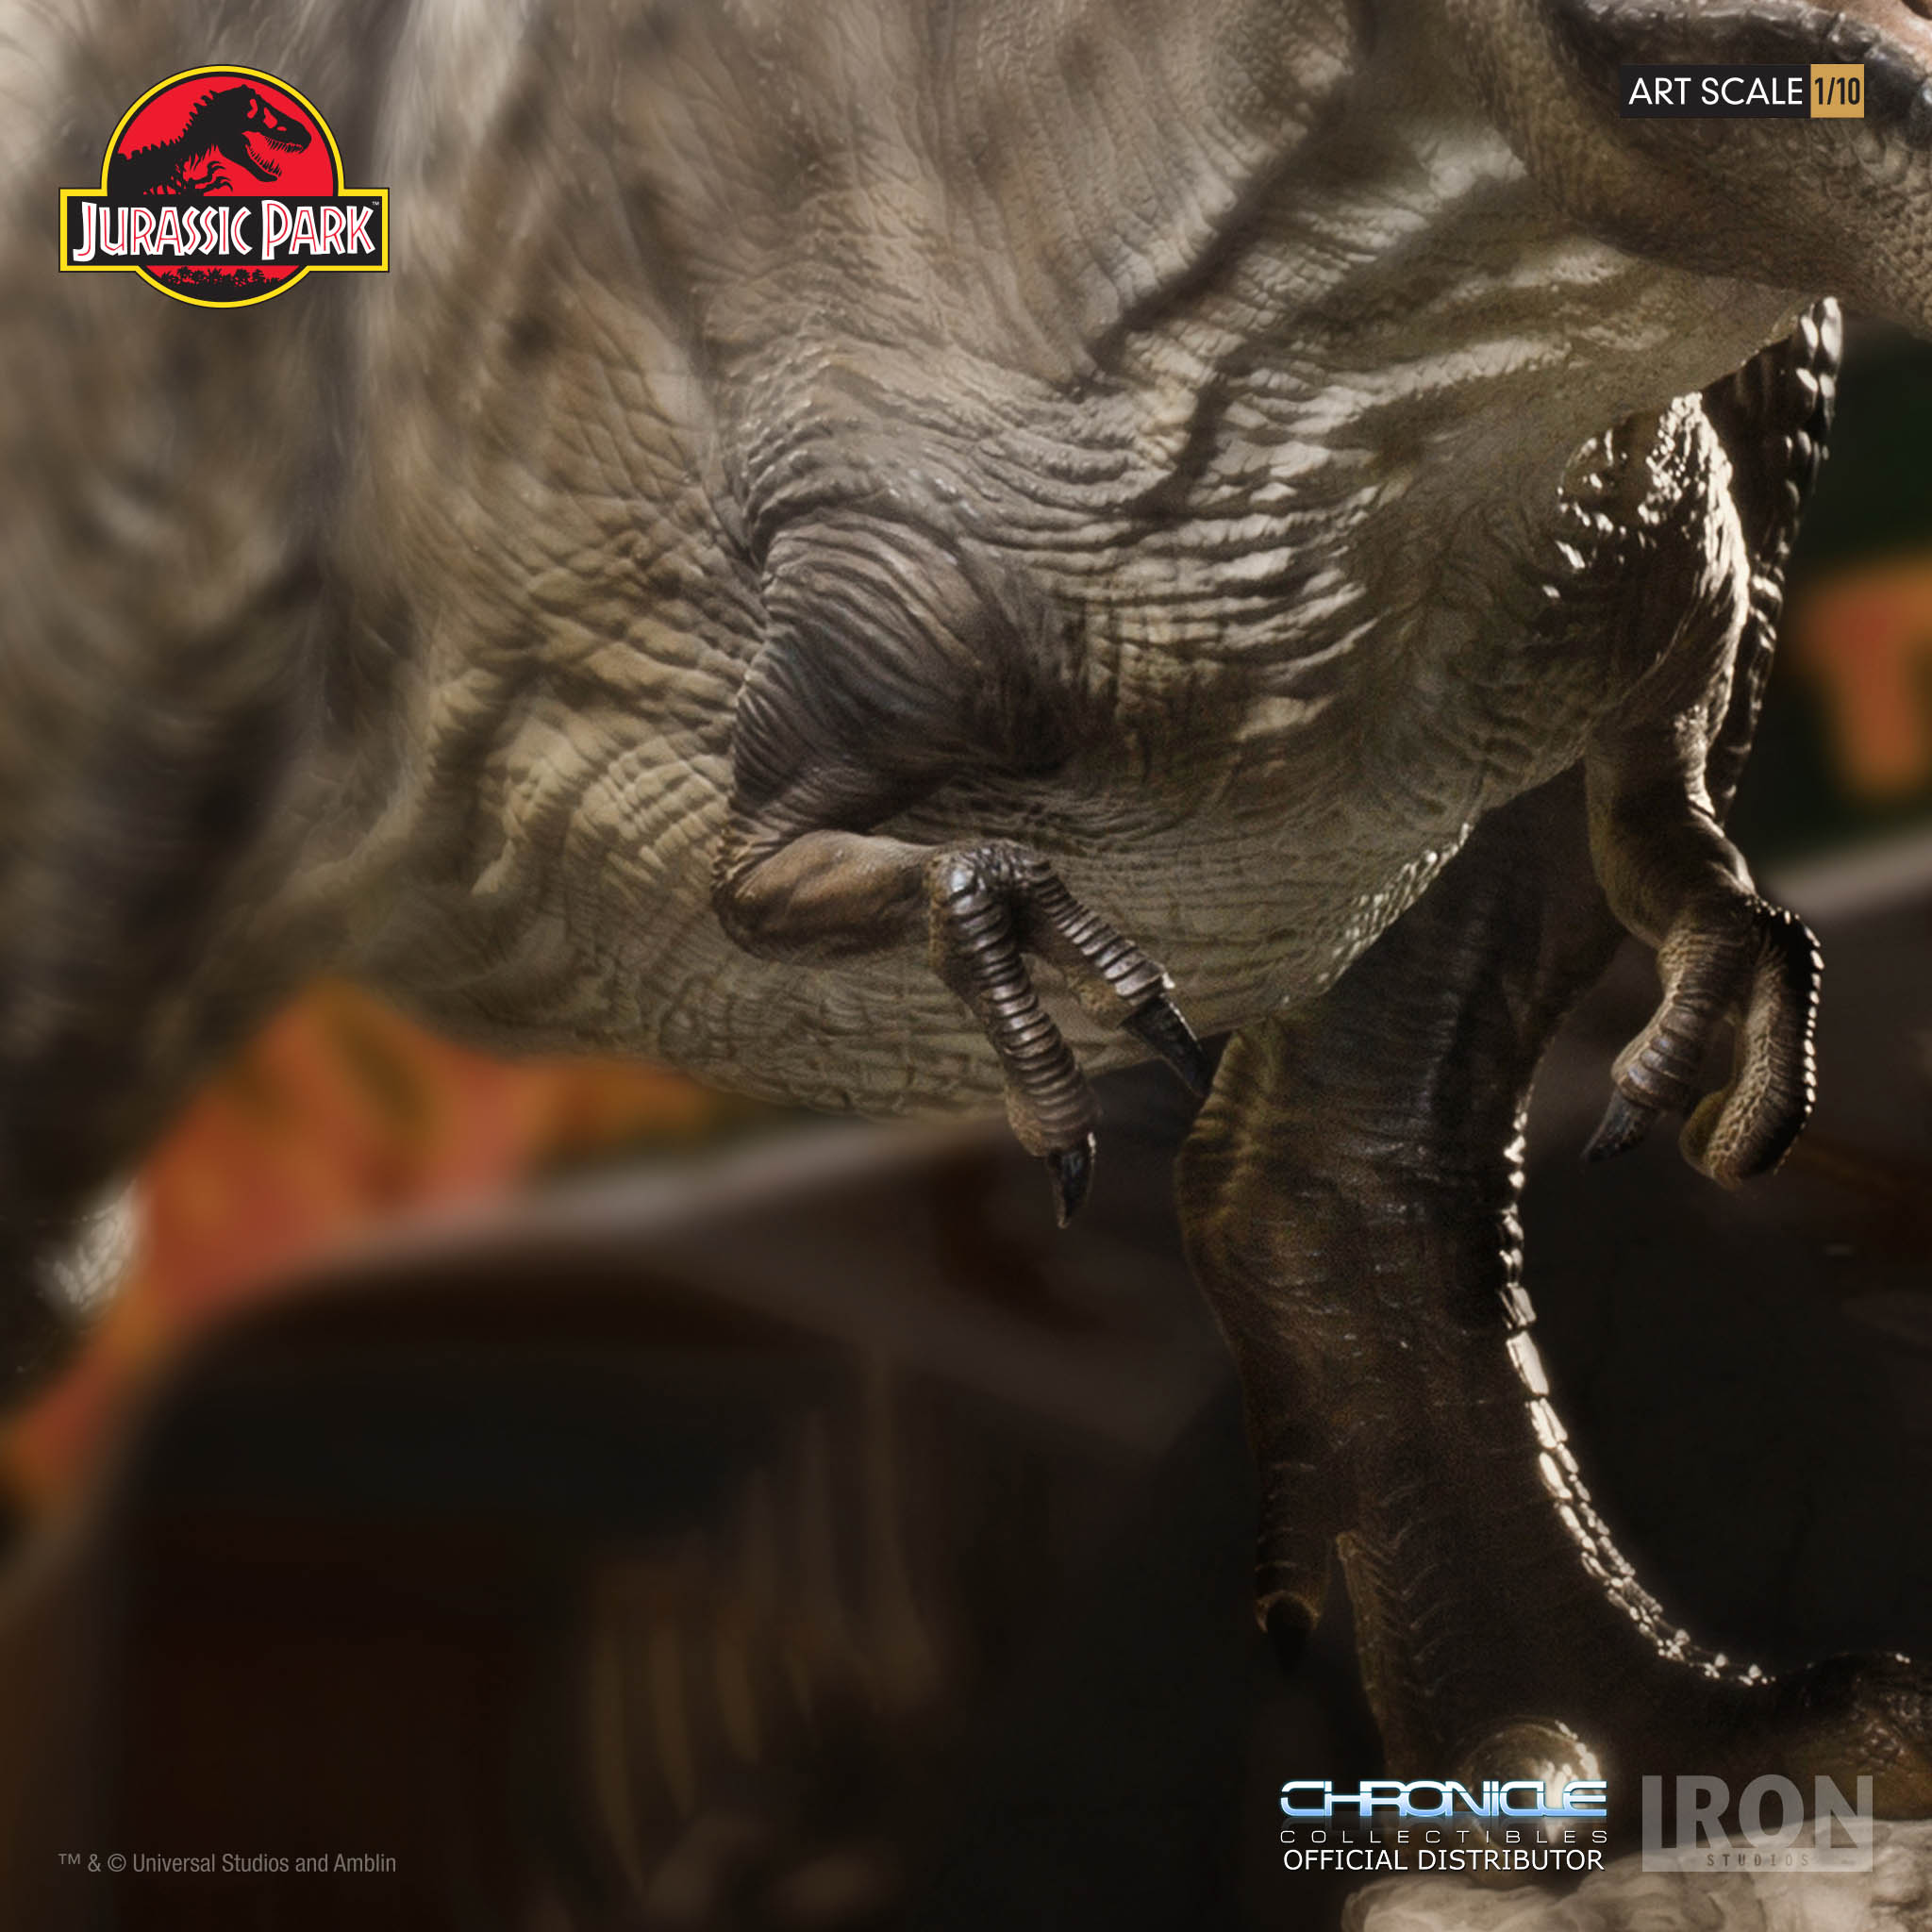 Jurassic Park & Jurassic World - Iron Studio L7LlMCjJ_o